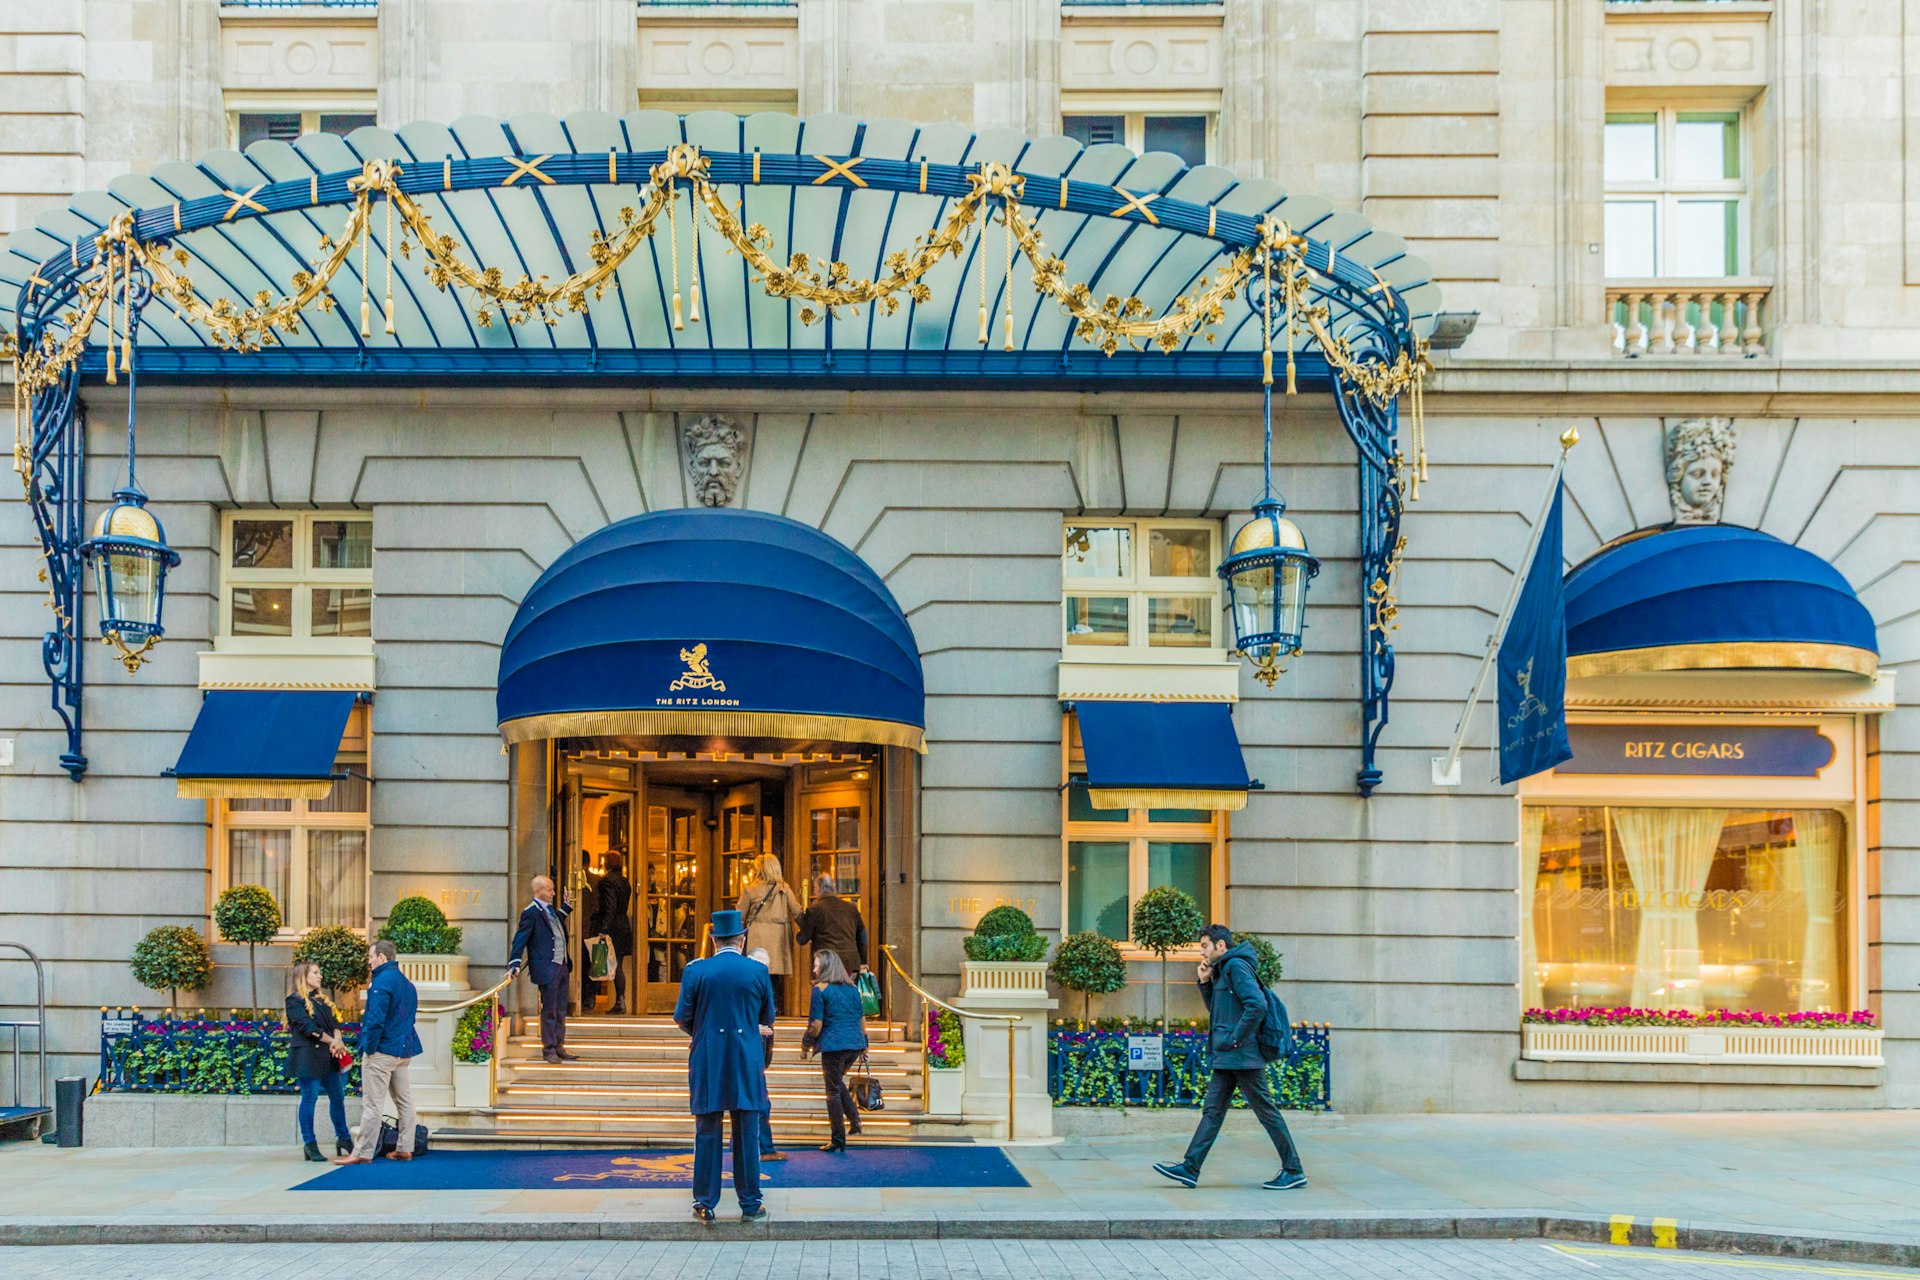 Facade of the Ritz Hotel in London